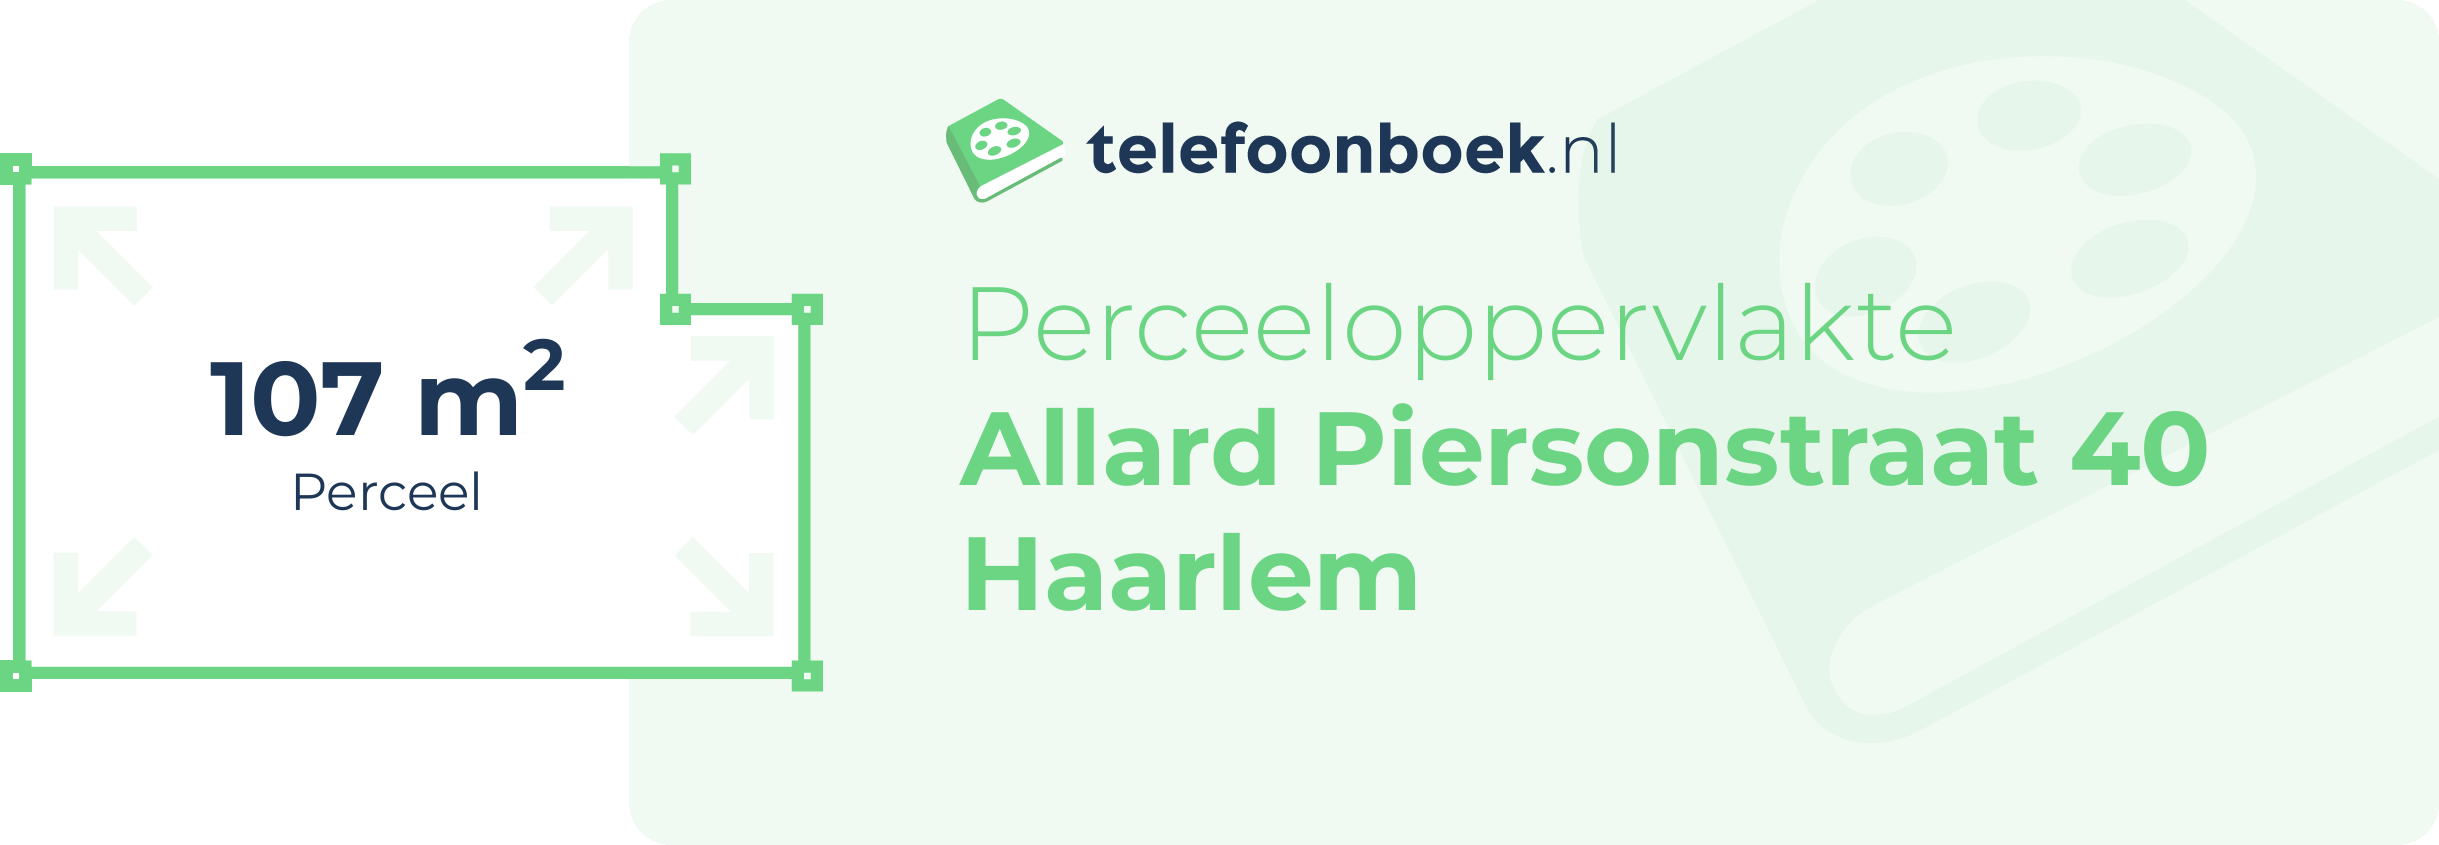 Perceeloppervlakte Allard Piersonstraat 40 Haarlem